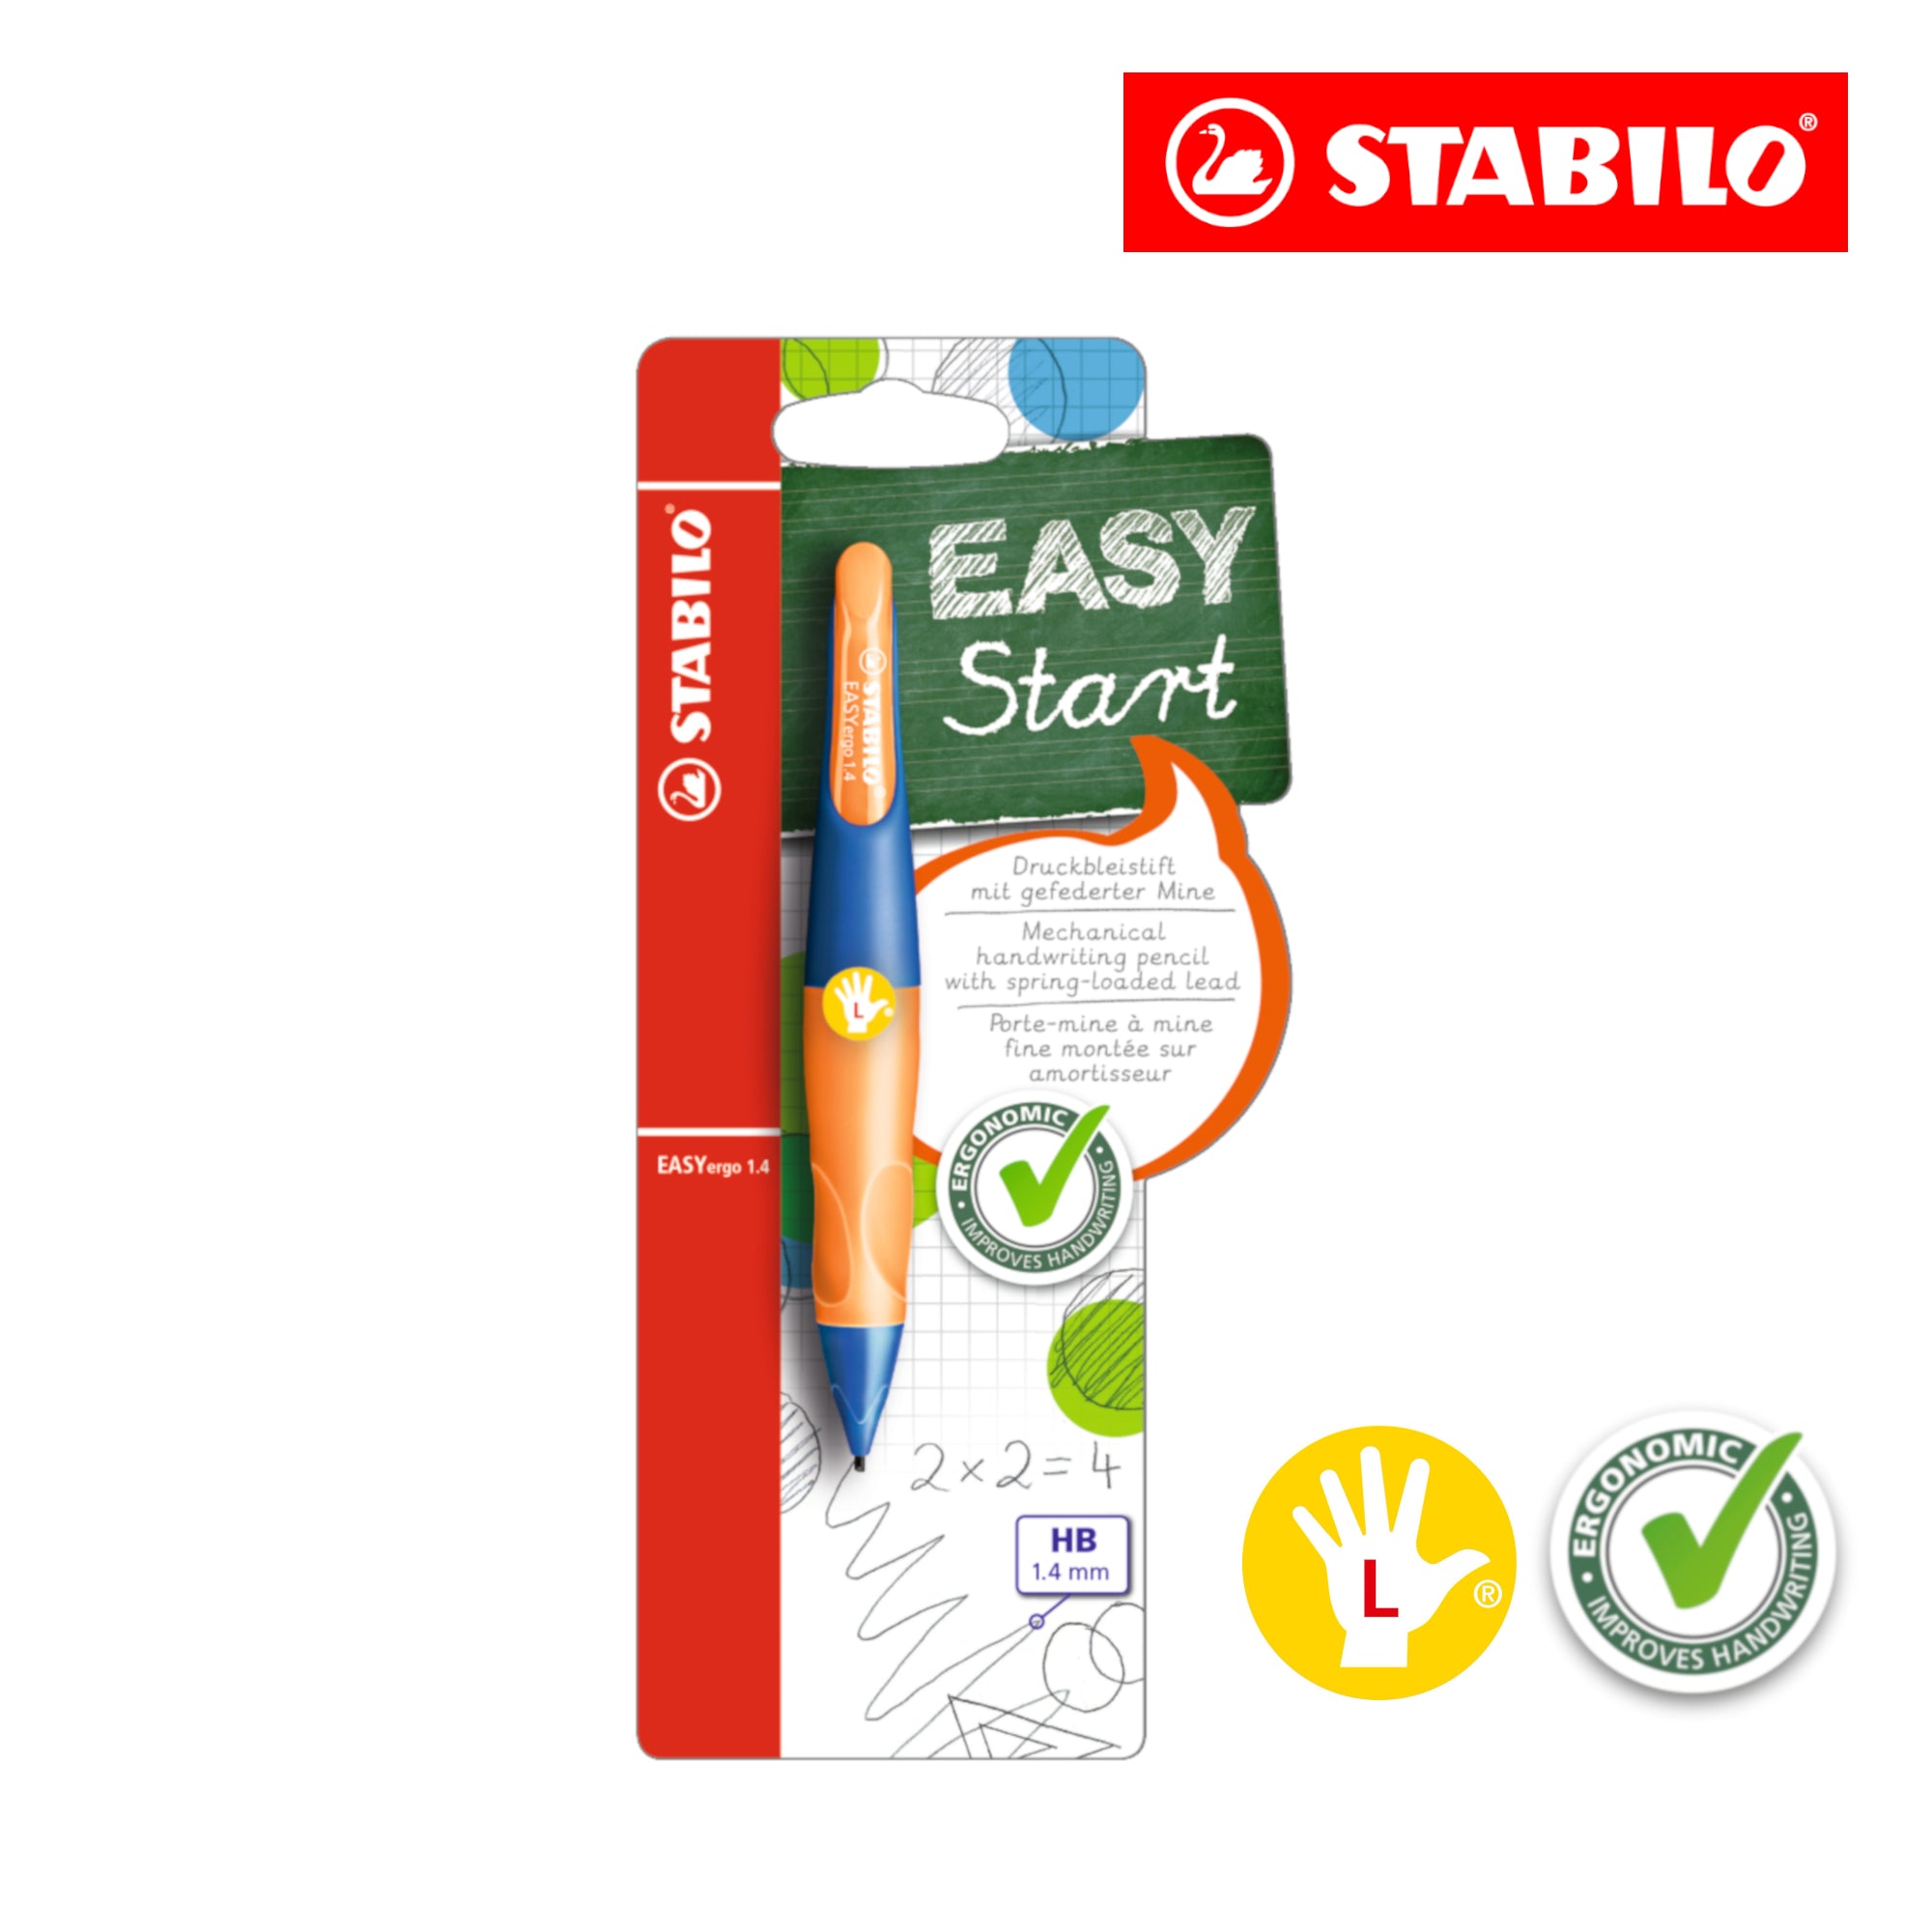 STABILO EASYergo 1.4mm Ergonomic Mechanical Pencil (Left-Hander) - Schwan-STABILO -Most colourful Stationery Shop